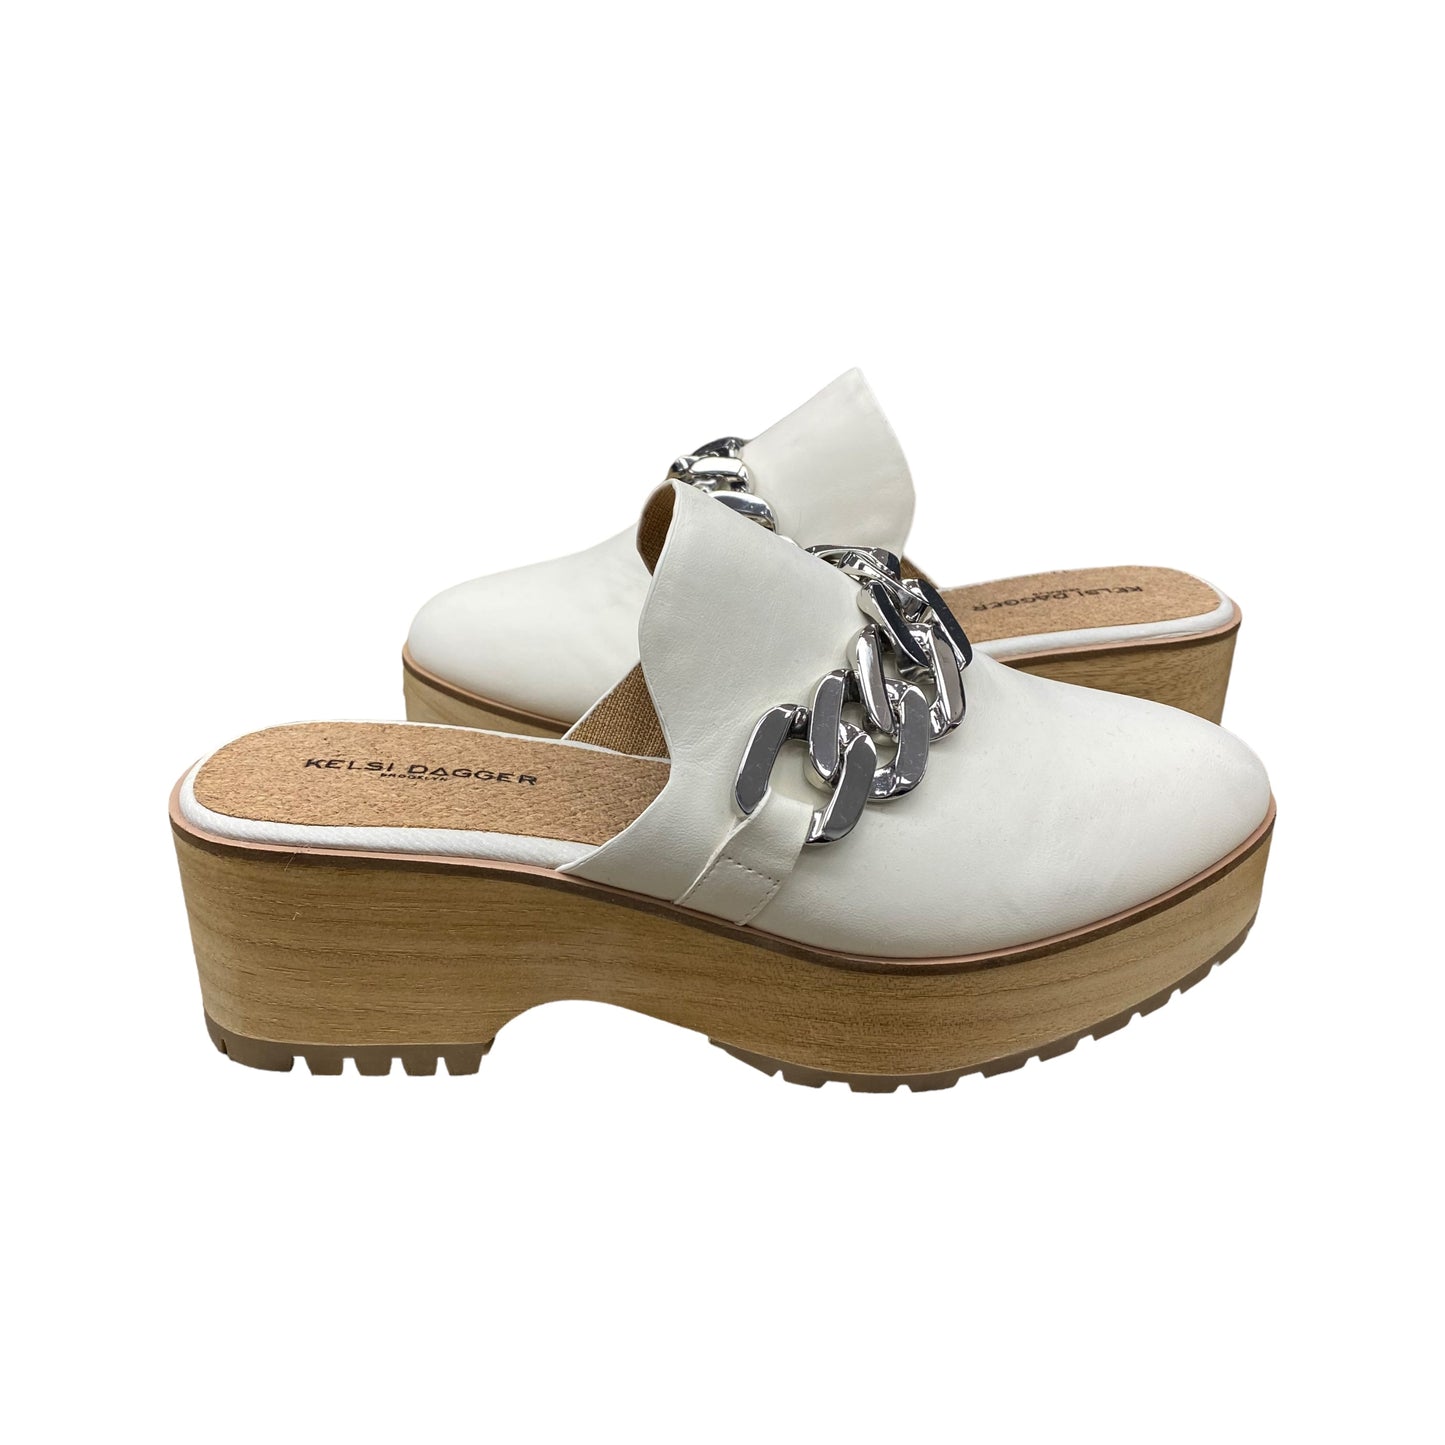 Cream & Tan Shoes Heels Platform Kelsi Dagger, Size 10